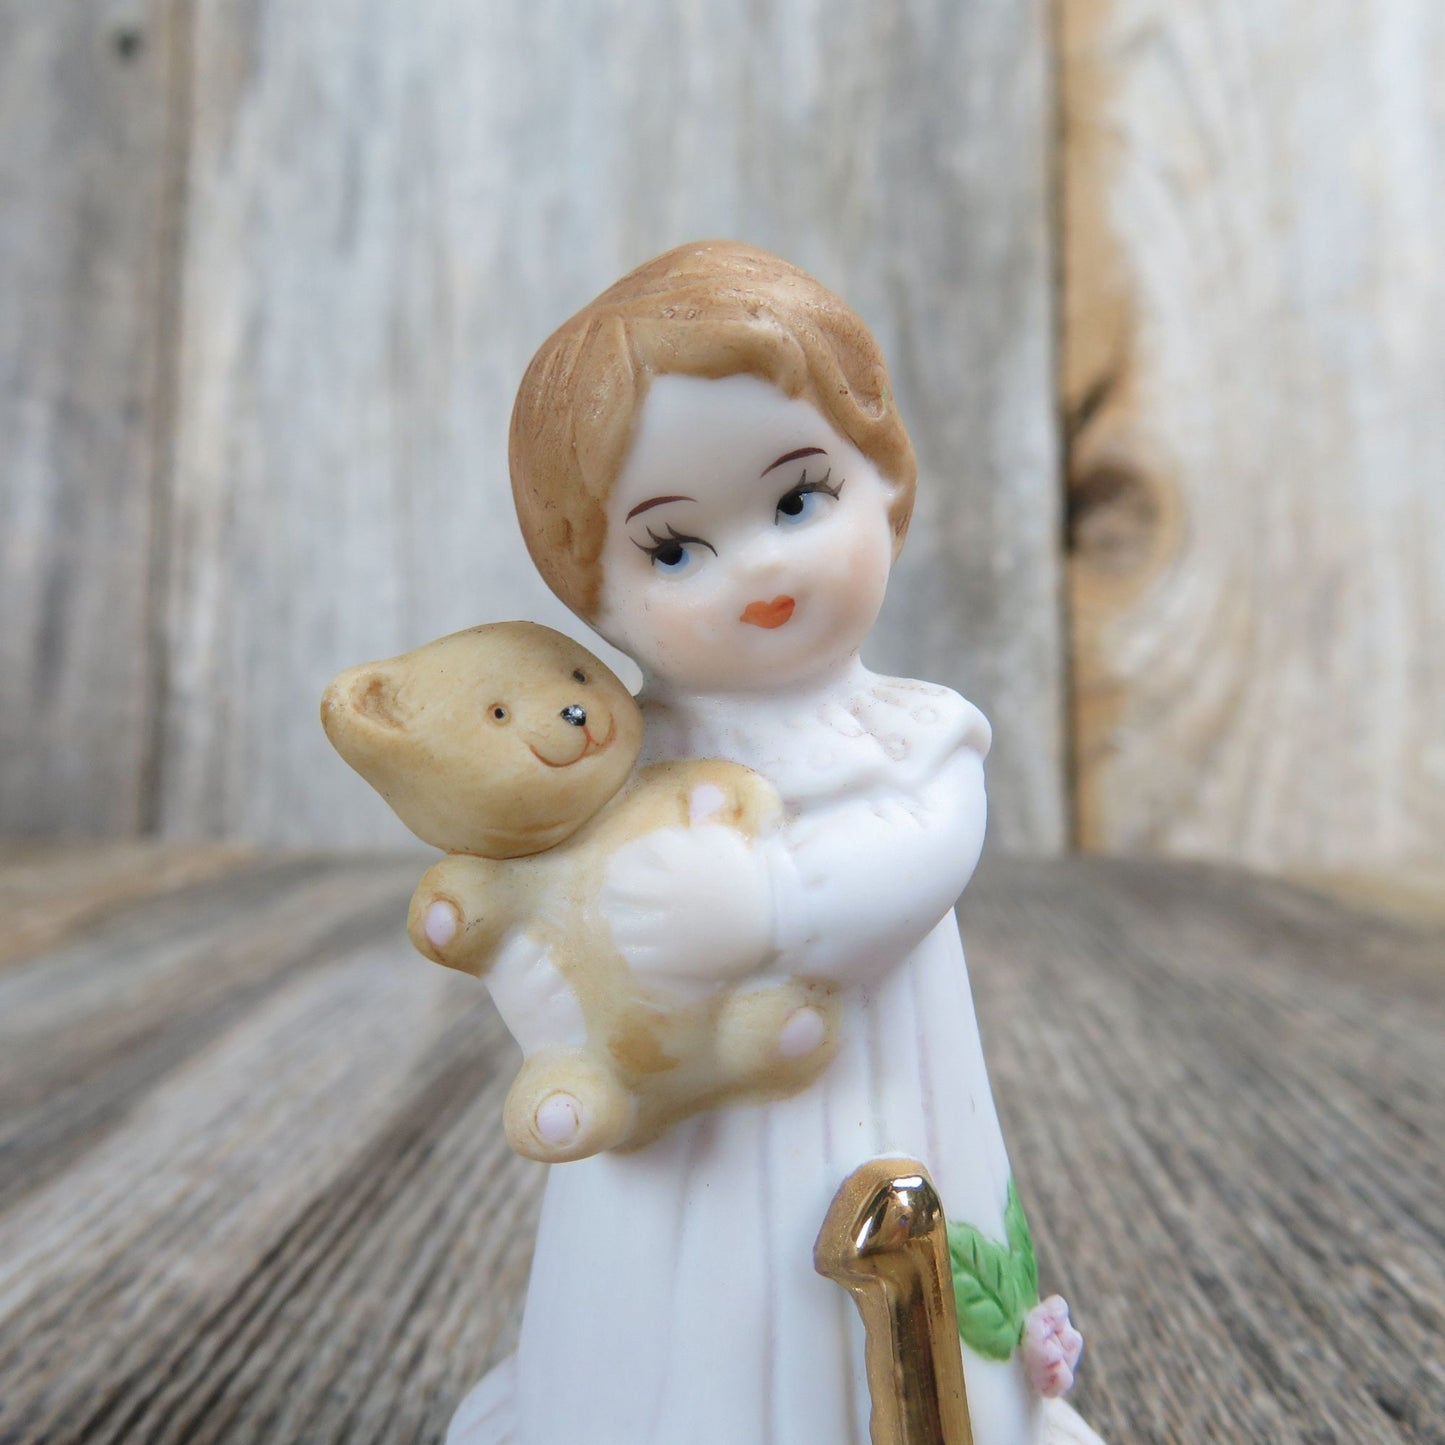 Growing Up Birthday Girl Enesco Figurine 1st Year Cake Topper 1982 Child One Year Teddy Bear